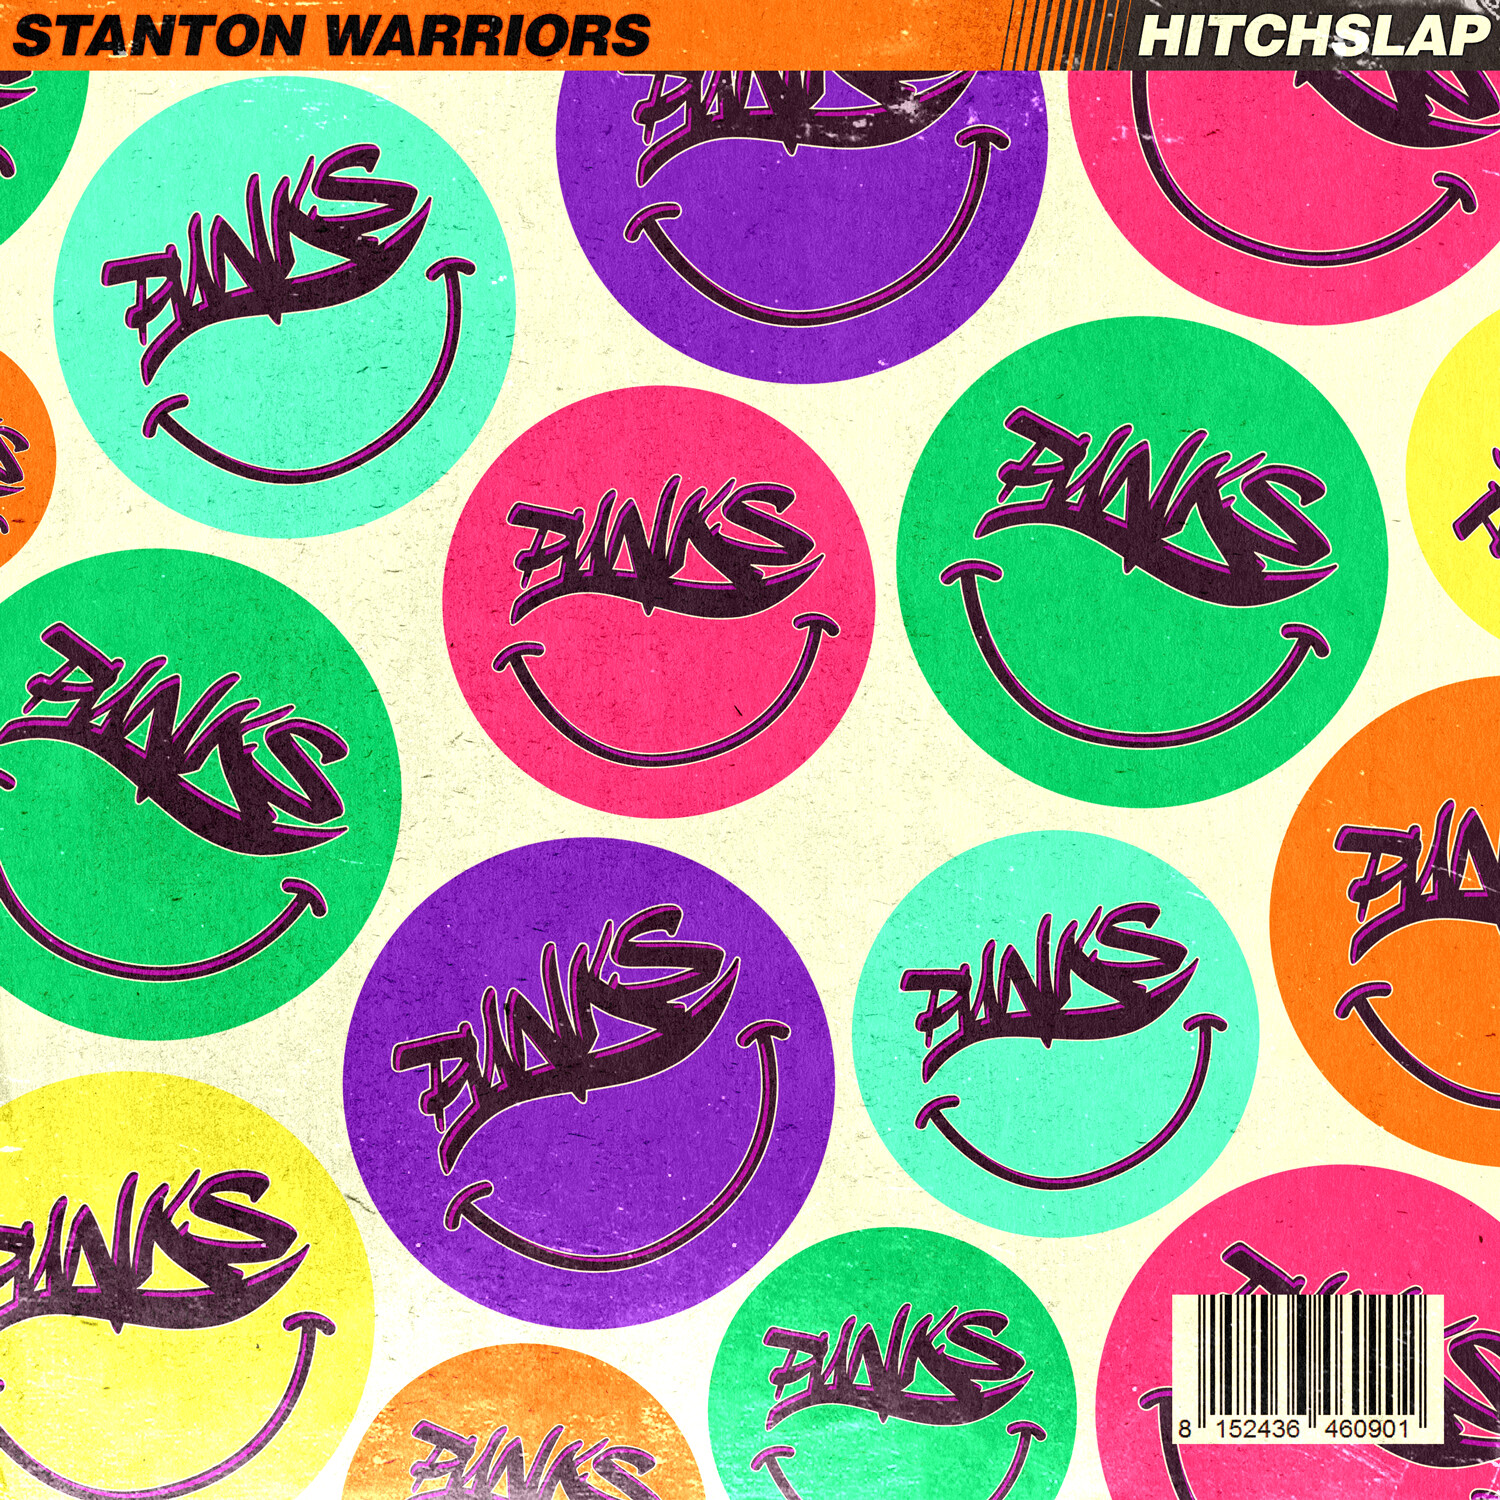 Stanton warriors. Stanton Warrior фото. Stanton Warriors – the Stanton session. "Stanton Warriors" && ( исполнитель | группа | музыка | Music | Band | artist ) && (фото | photo).